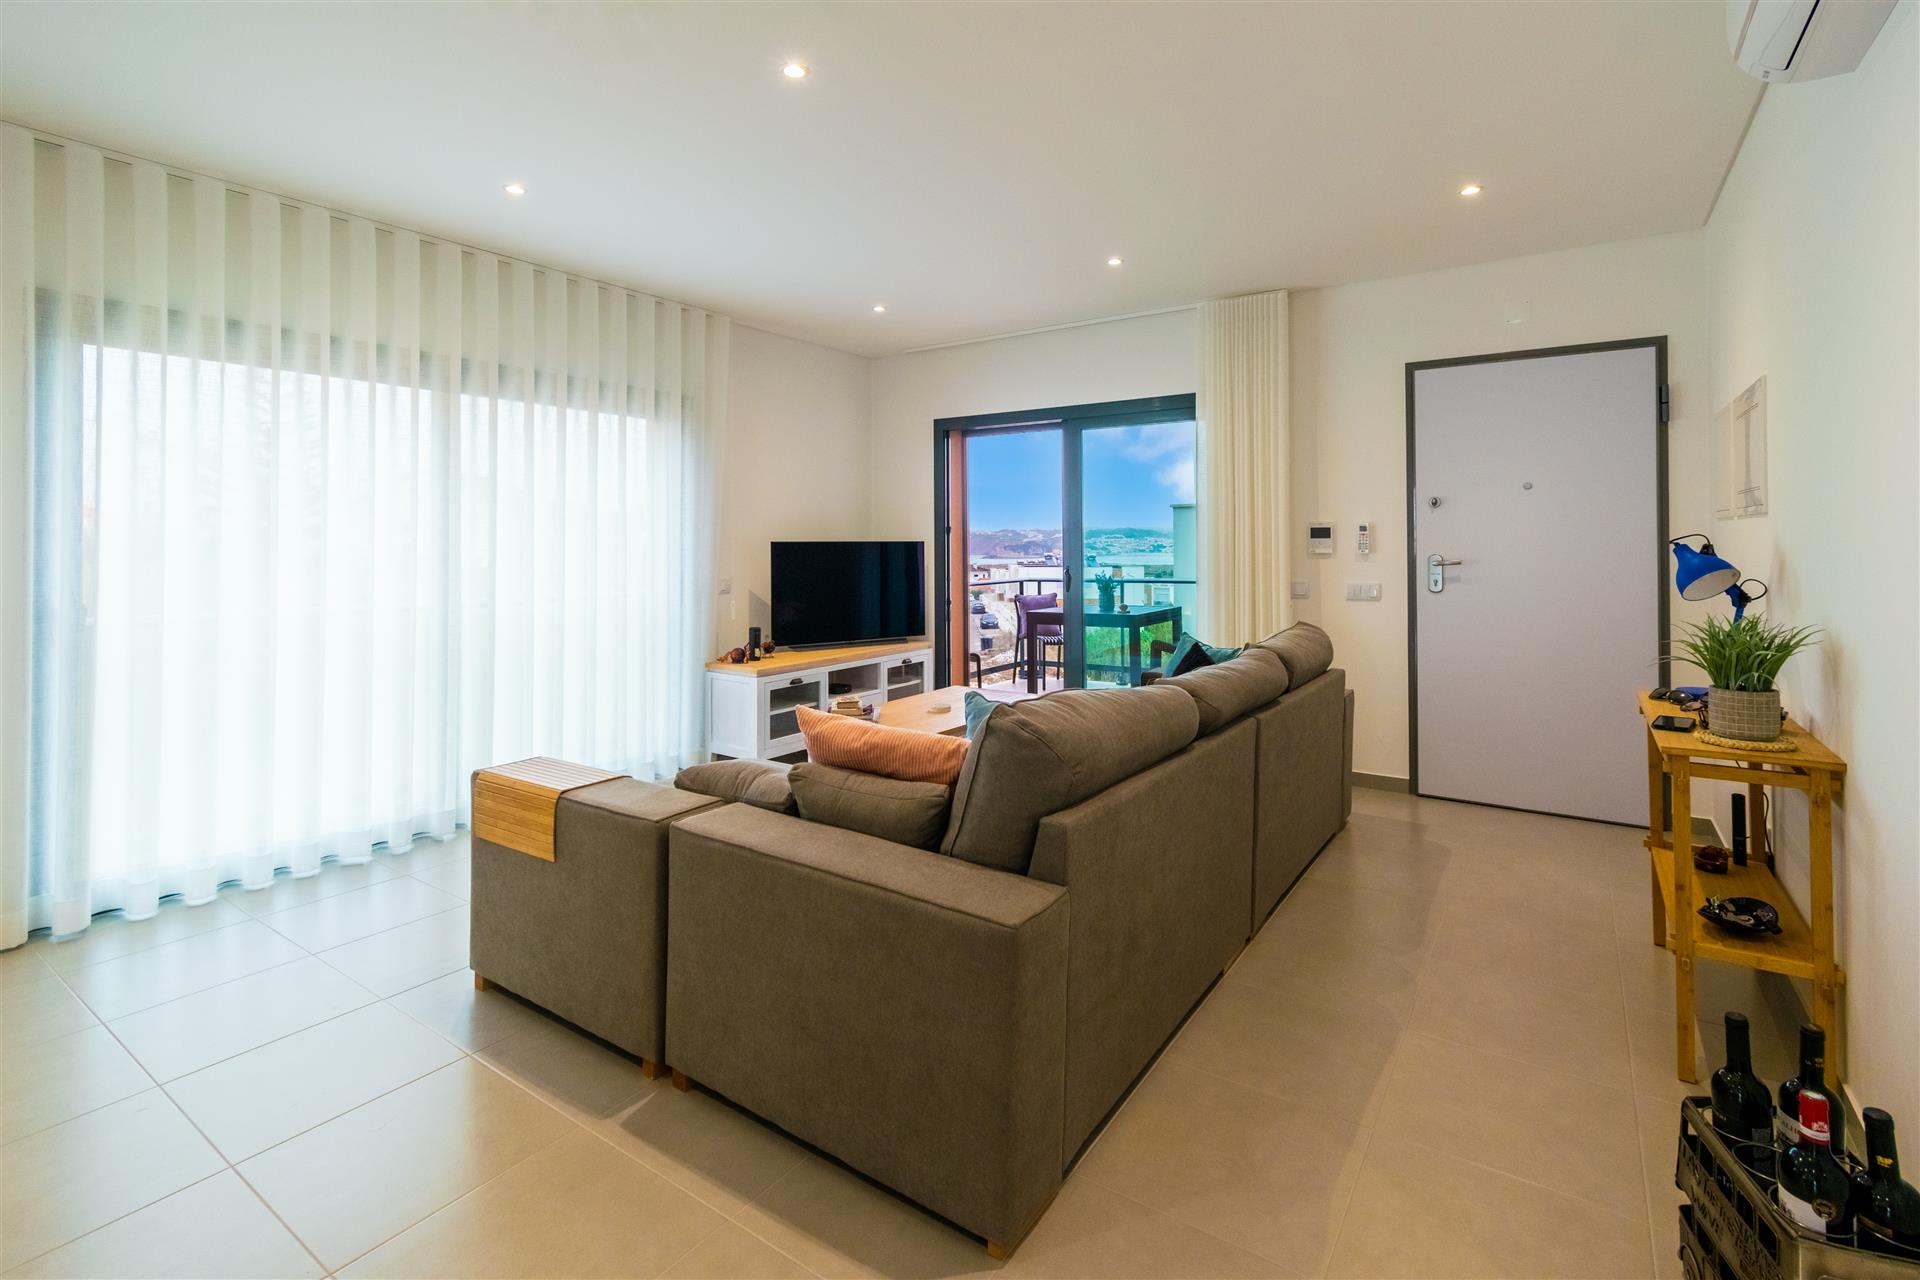 Semi-New 3 bedroom flat with bay view of São Martinho do Porto